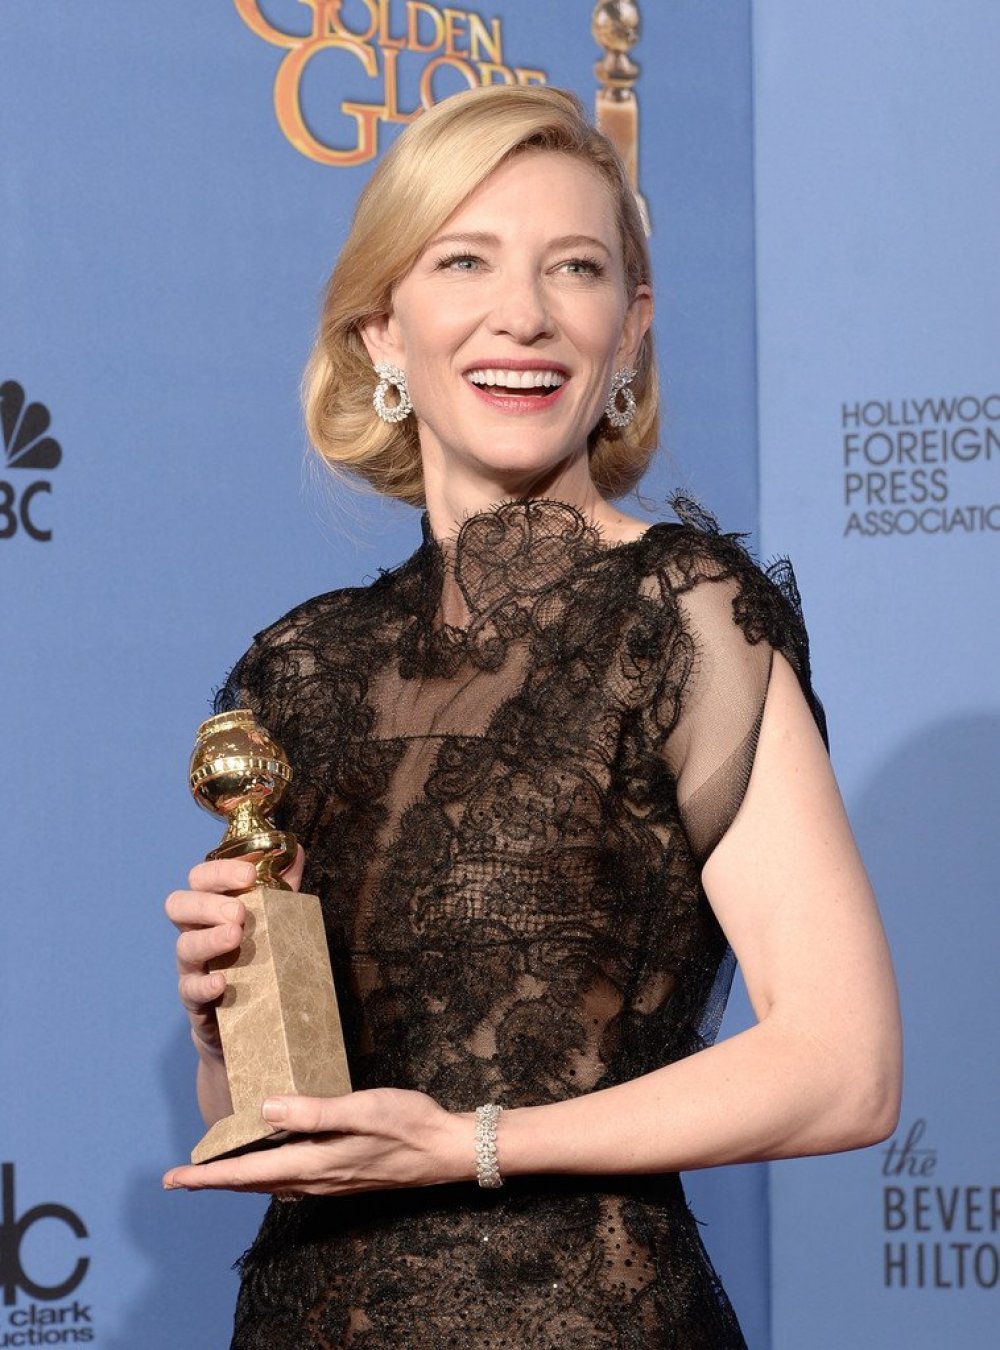 The Golden Globe Awards 2014 Awards Ceremony